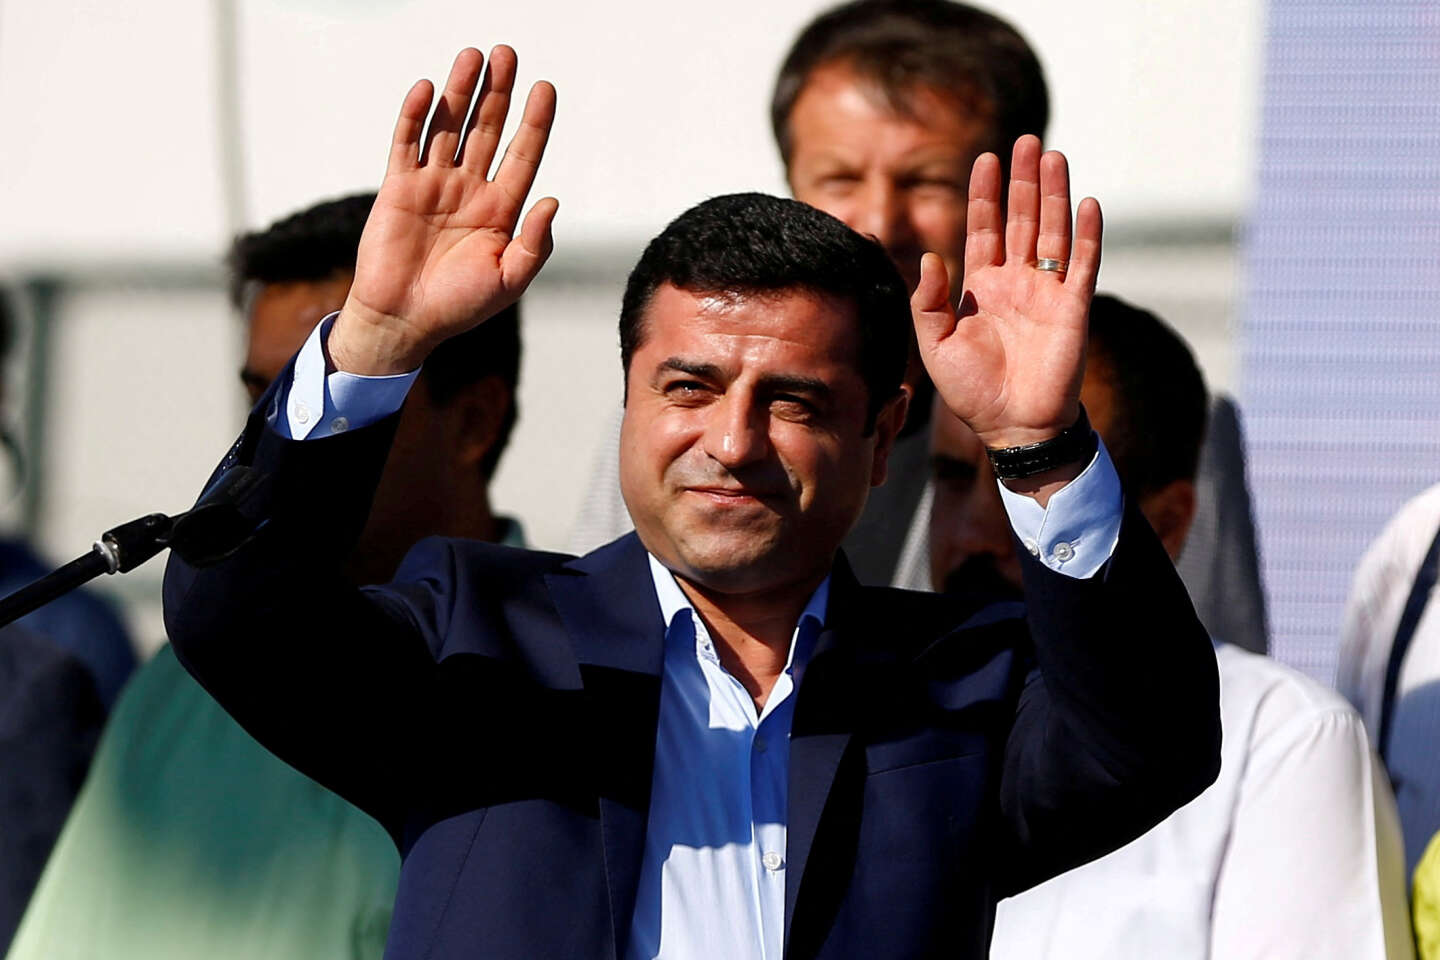 Kurdish leader Selahattin Demirtas was sentenced to forty-two years in prison